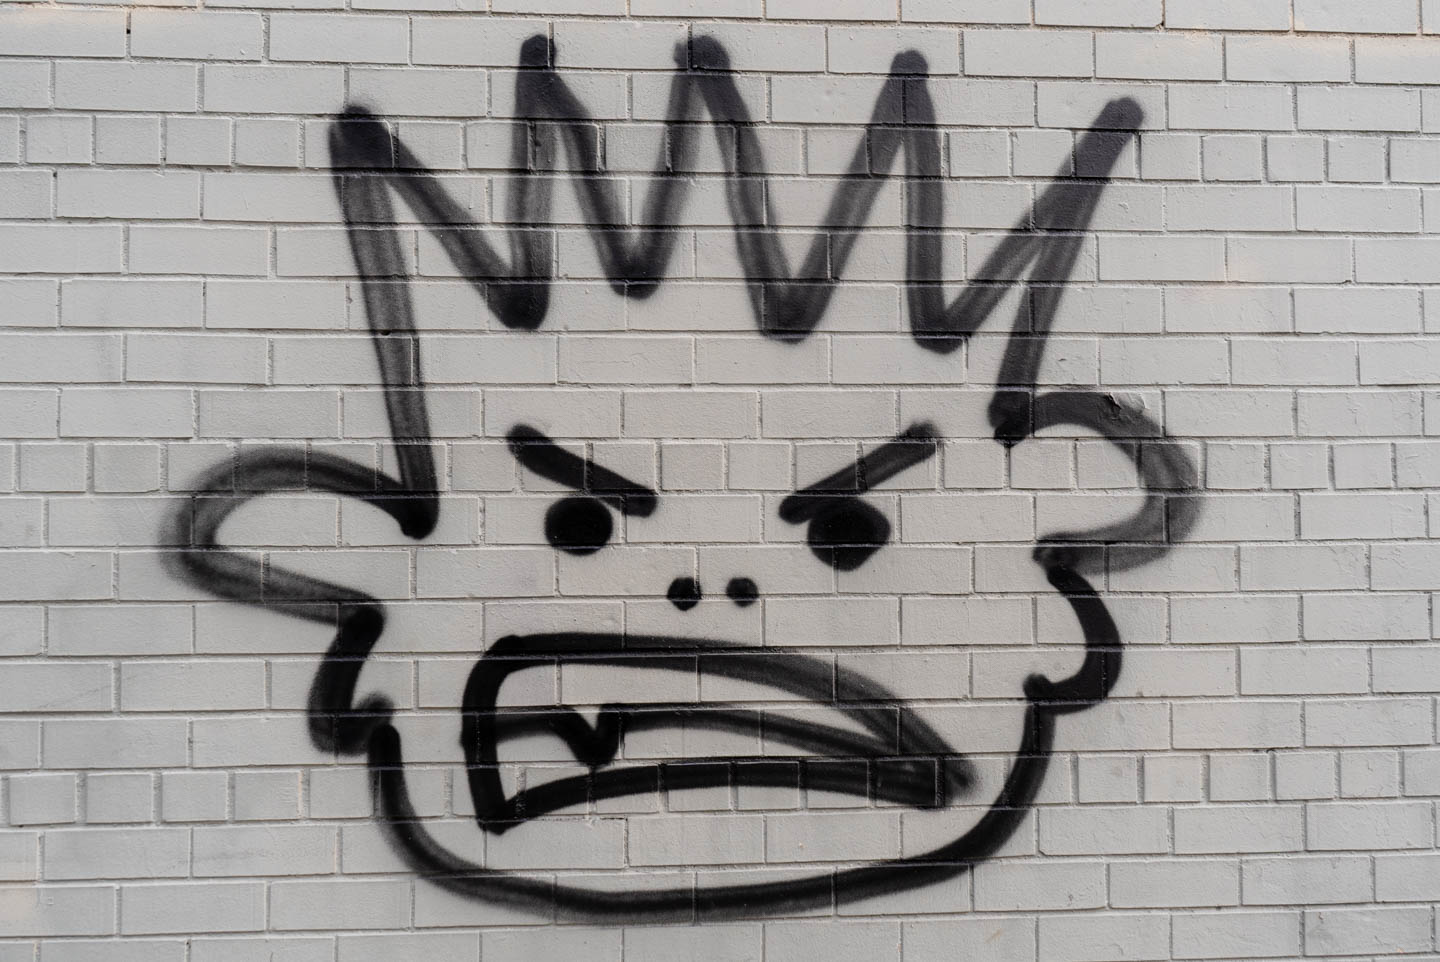 September 9, 2020: Angry Crowned head. Flushing Avenue west of Broadway, Brooklyn, New York. © Camilo José Vergara